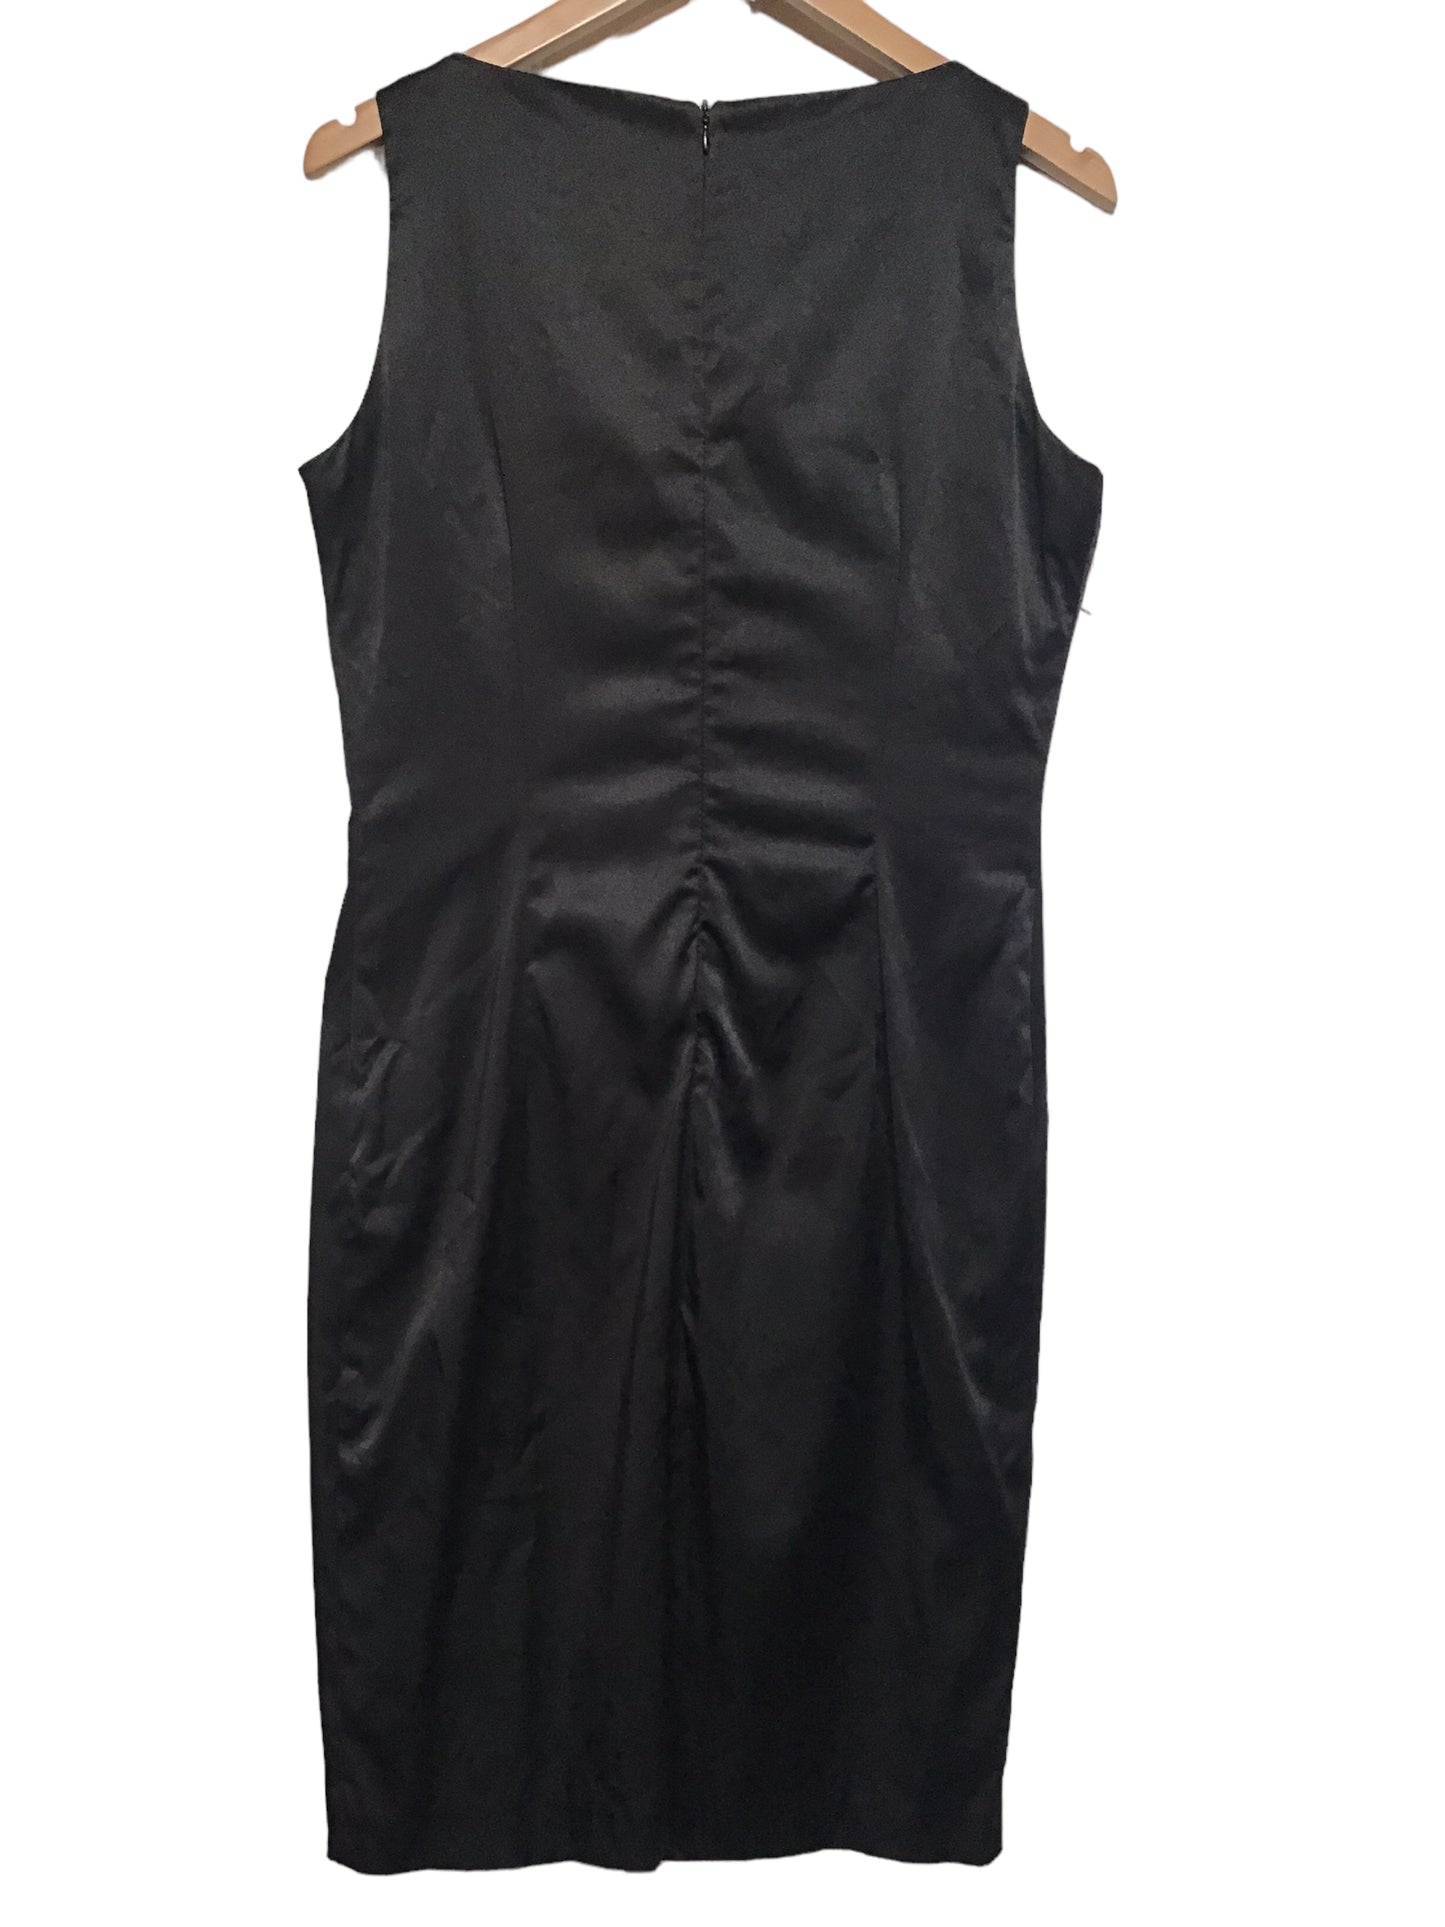 James Lakeland Dress (Size L)